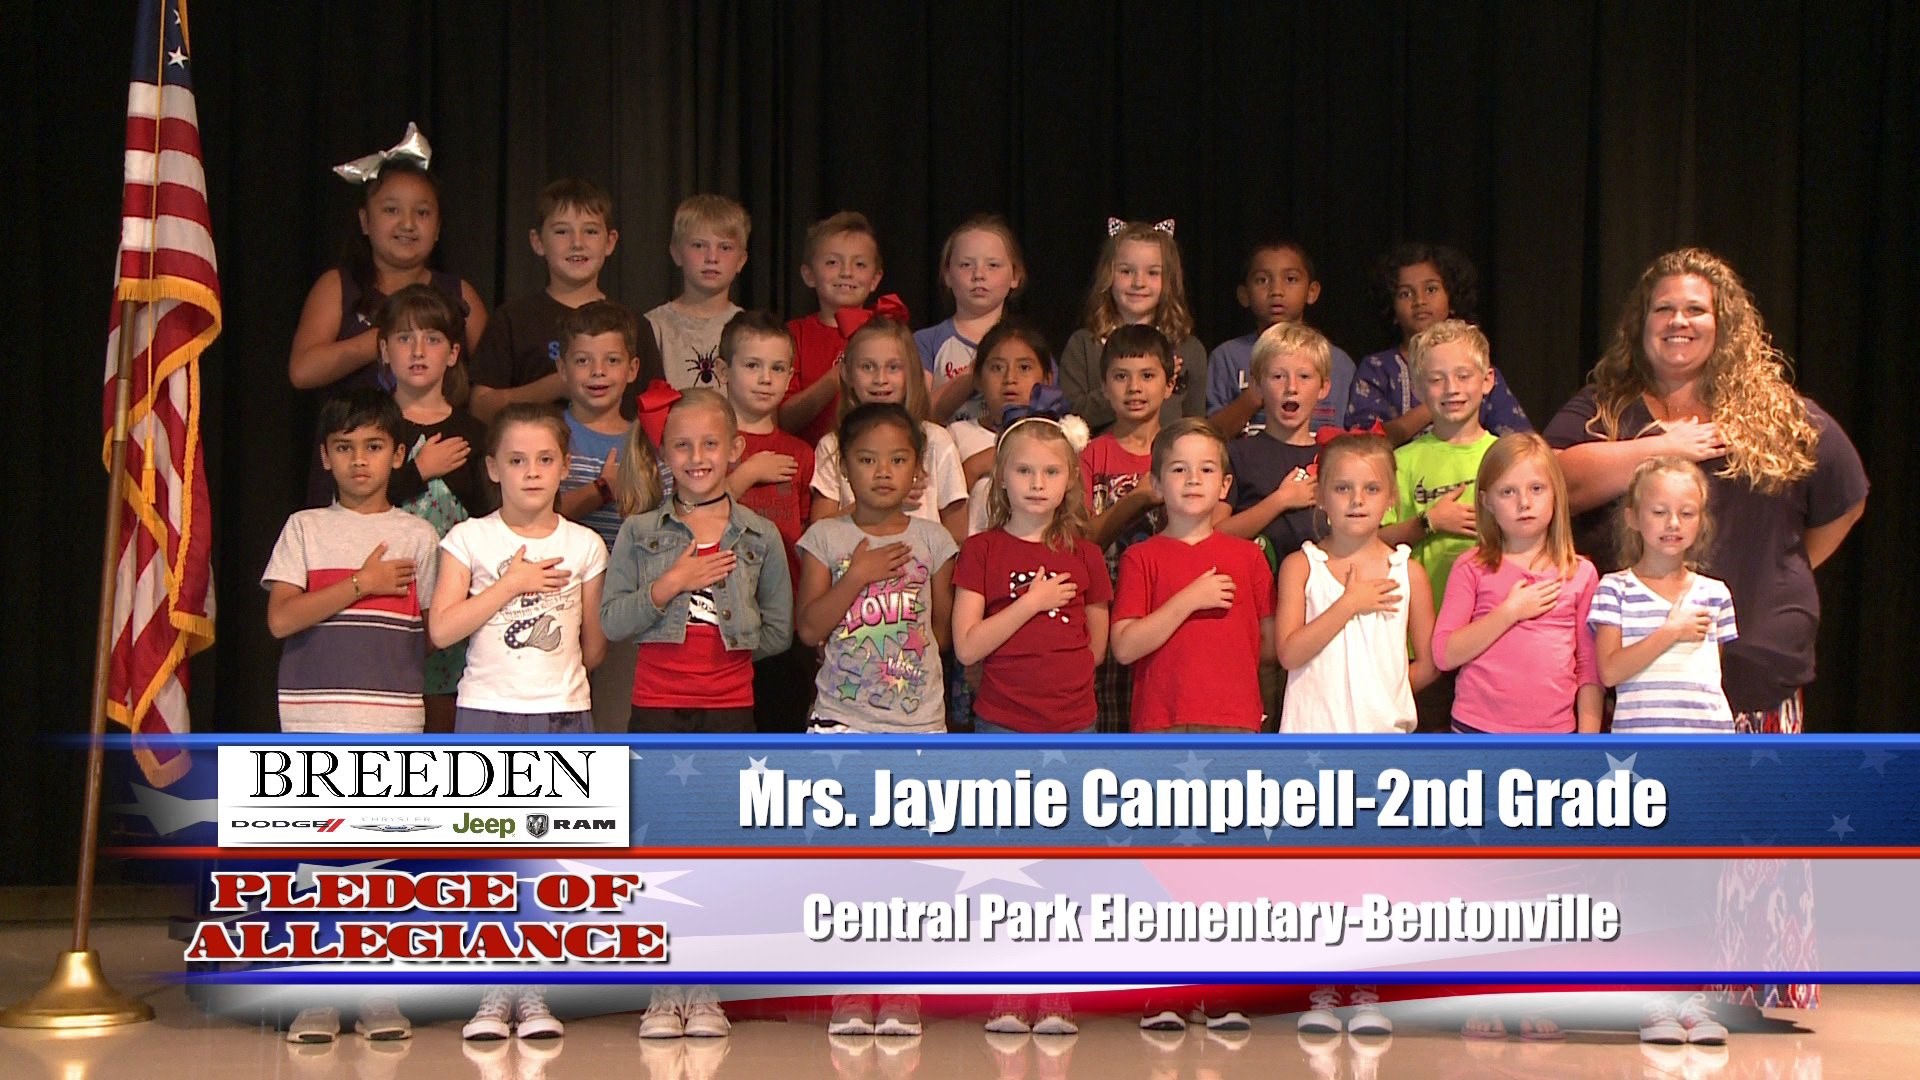 Central Park Elementary, Bentonville - Mrs. Jaymie Campbell - 2nd Grade